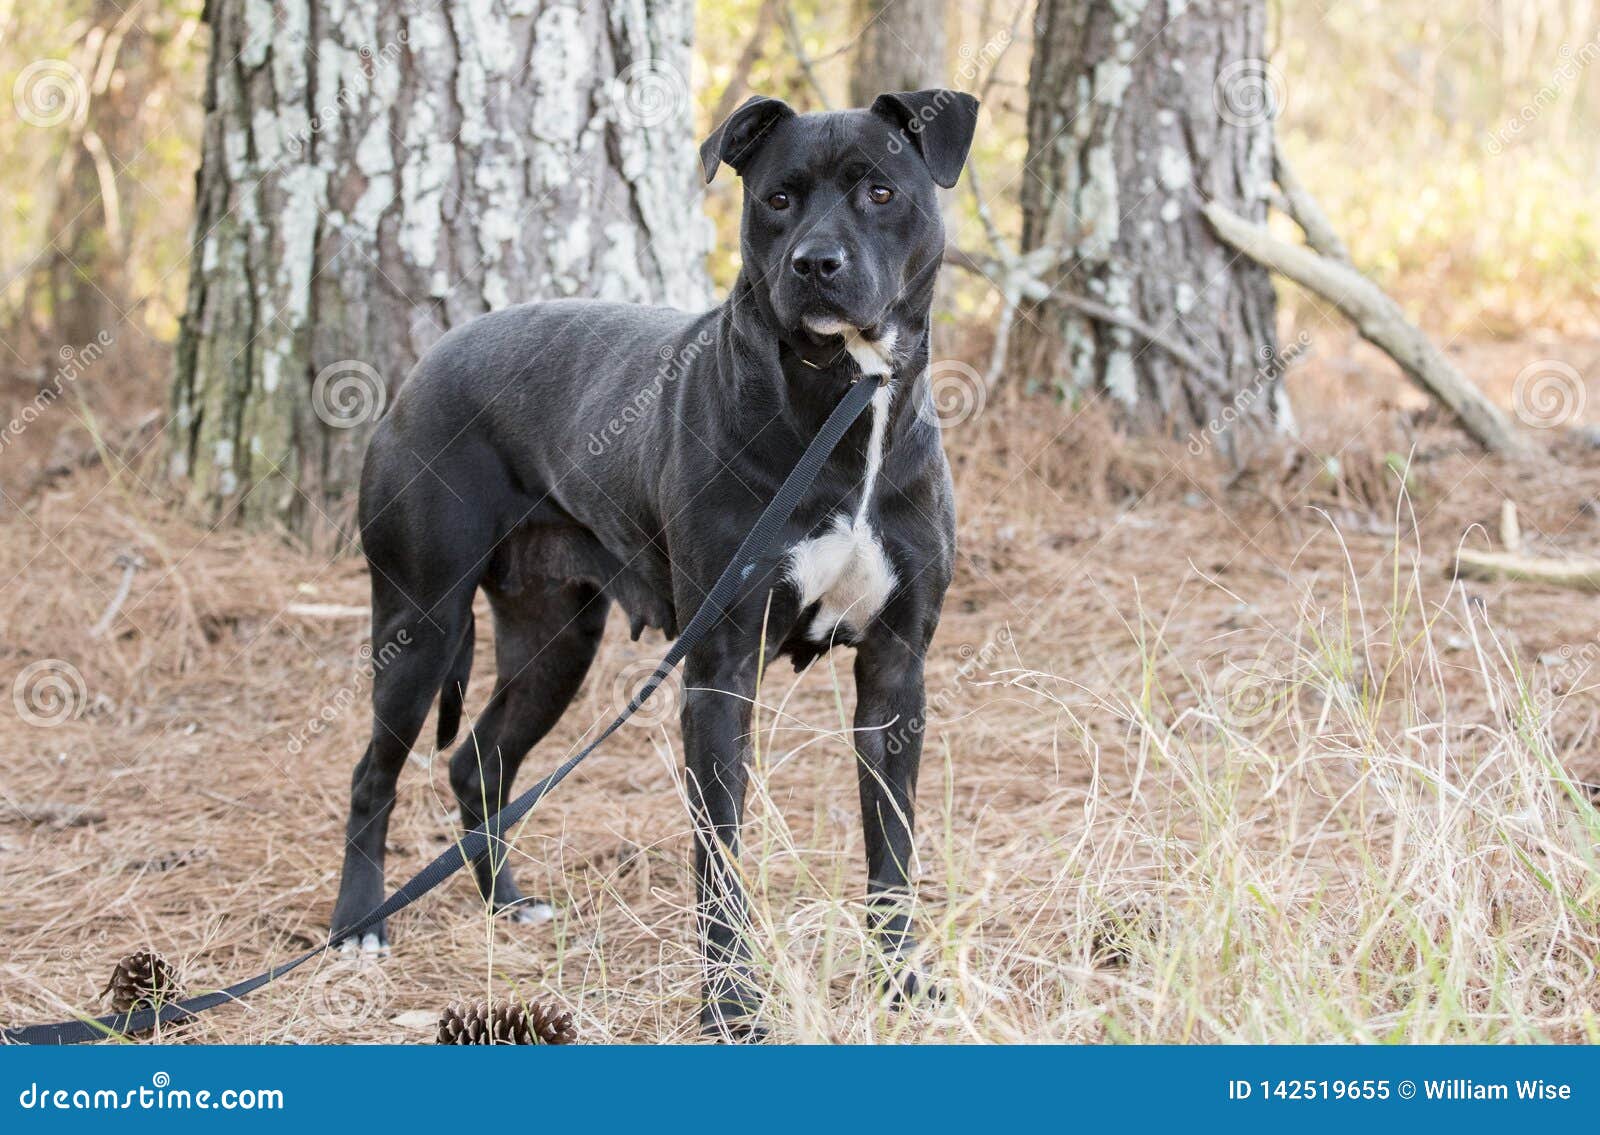 Black Pitbull Labrador Mixed Breed Dog Stock Image - Image Of Mutt, Animal:  142519655